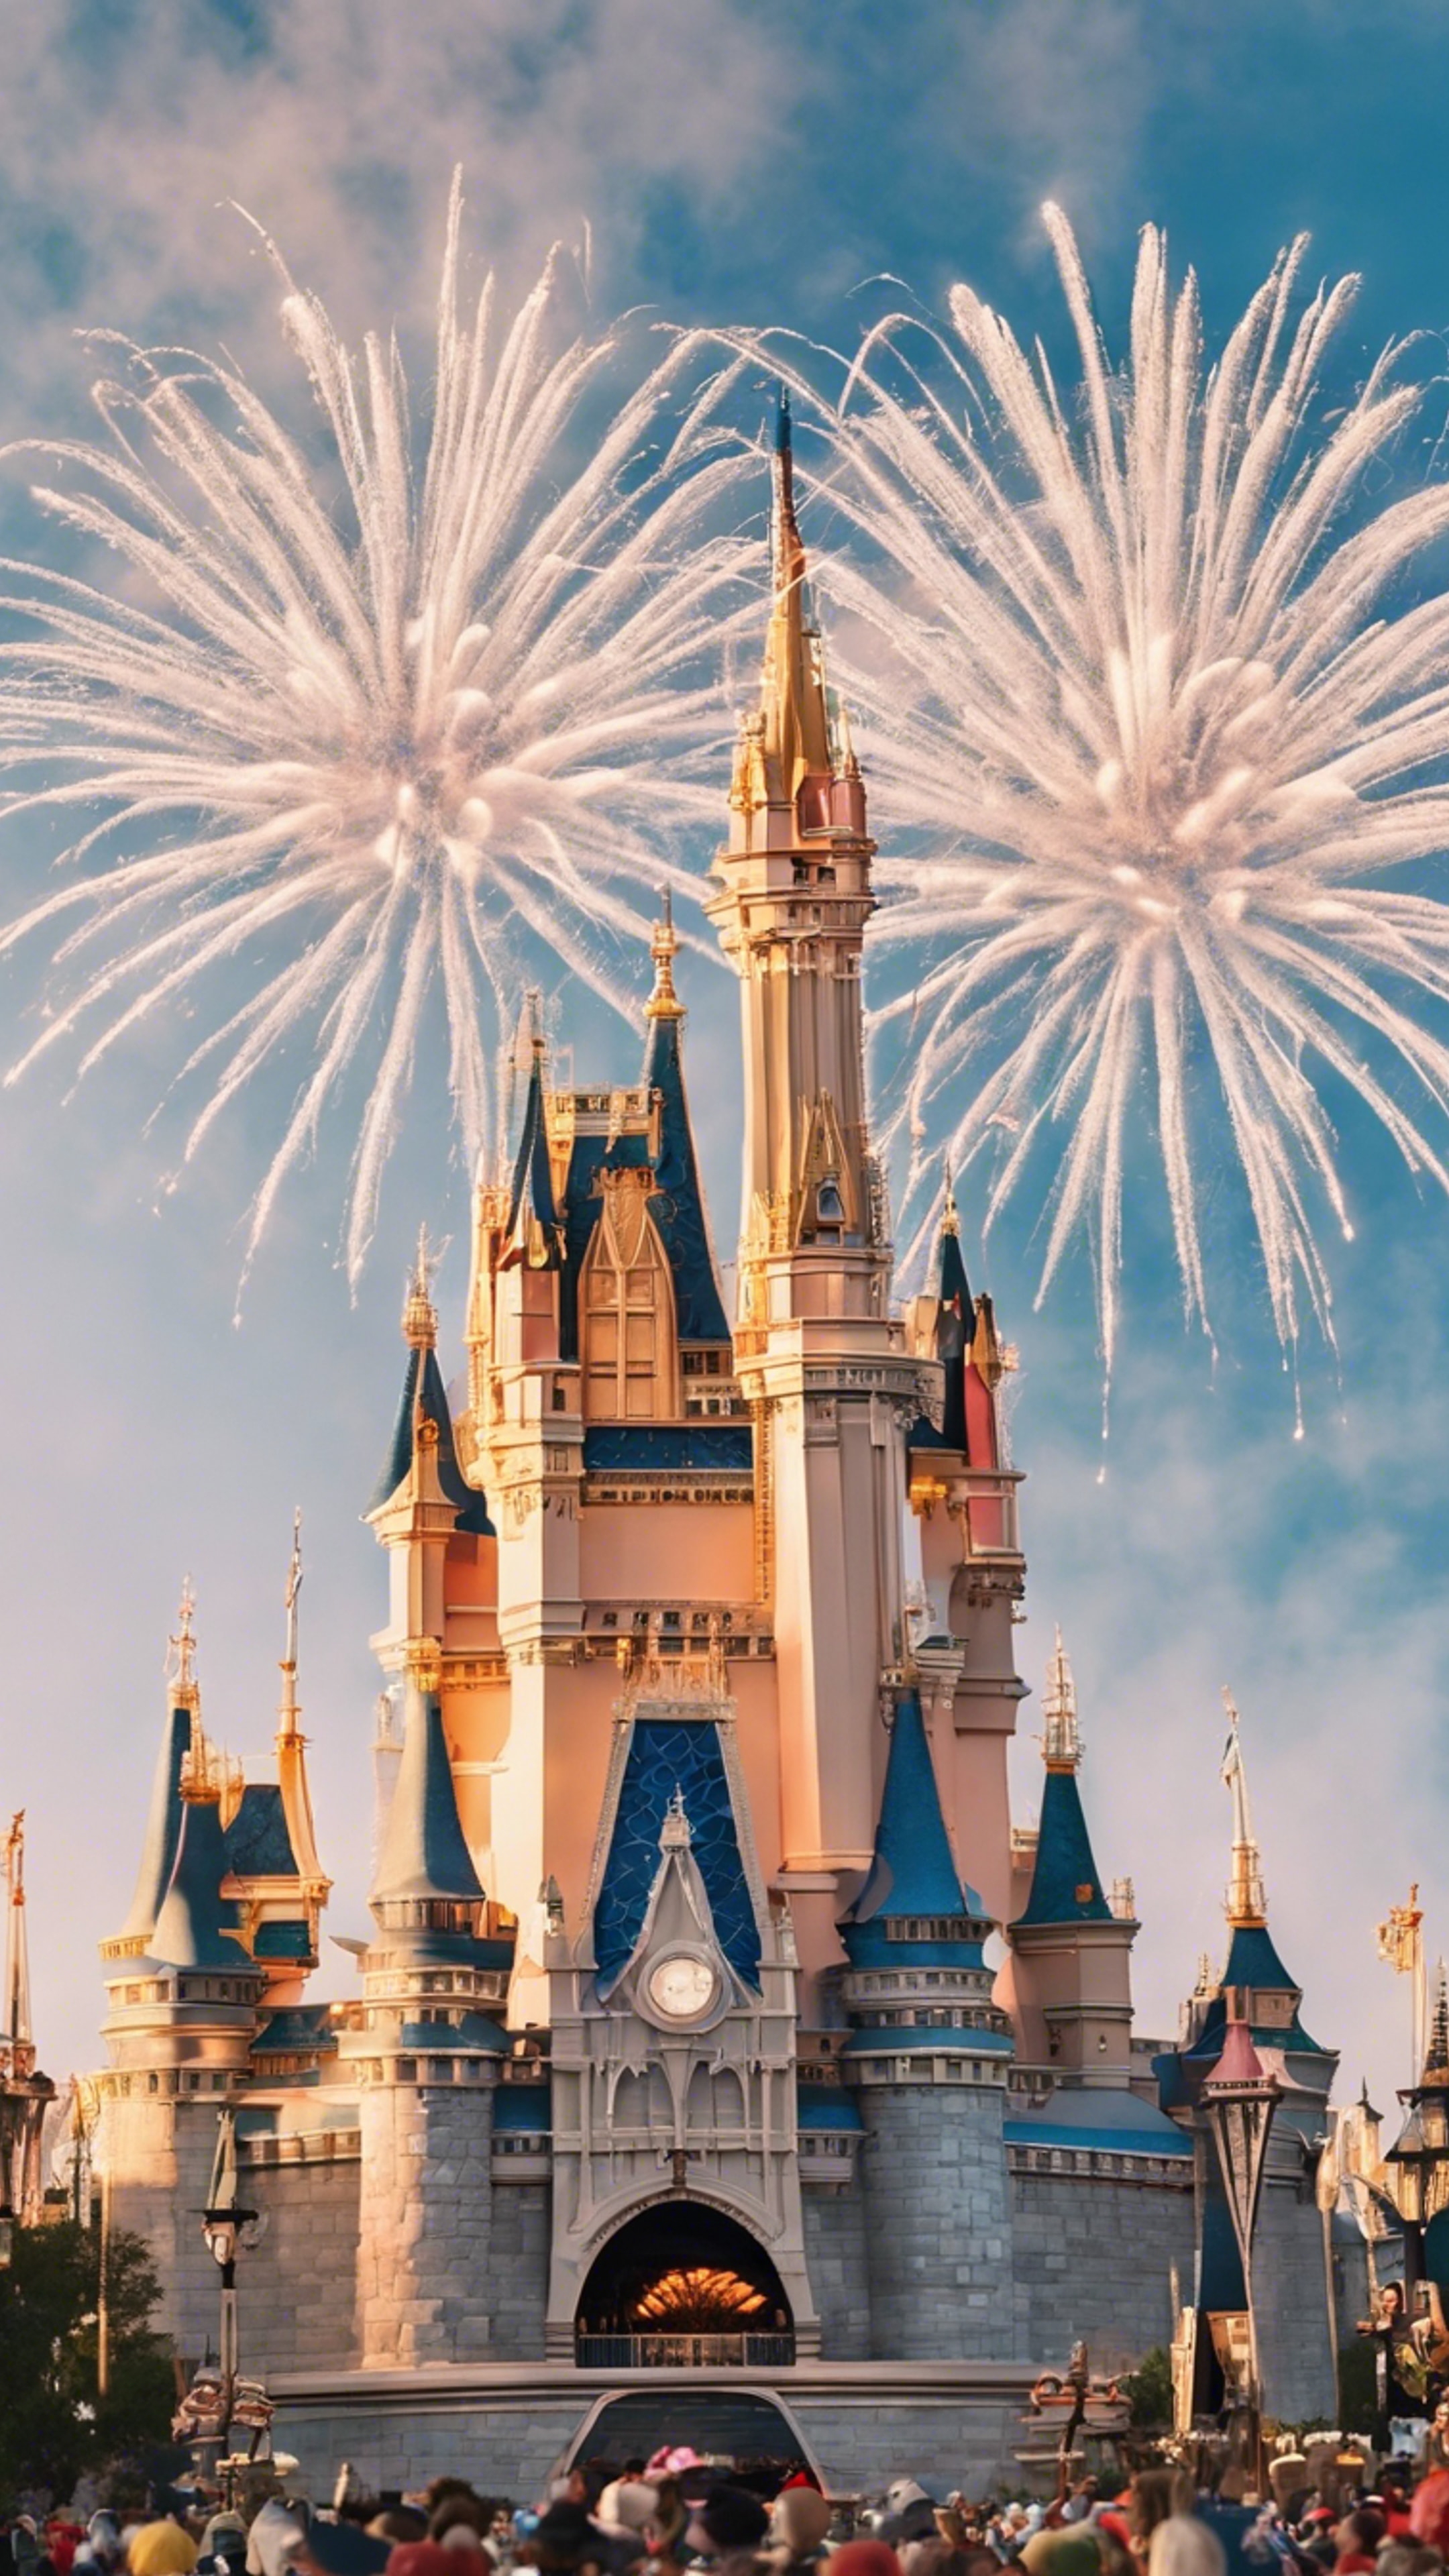 A dazzling firework display over Disney's Magic Kingdom, as seen from the Main Street U.S.A. Divar kağızı[06ea505dccb744c89f0a]